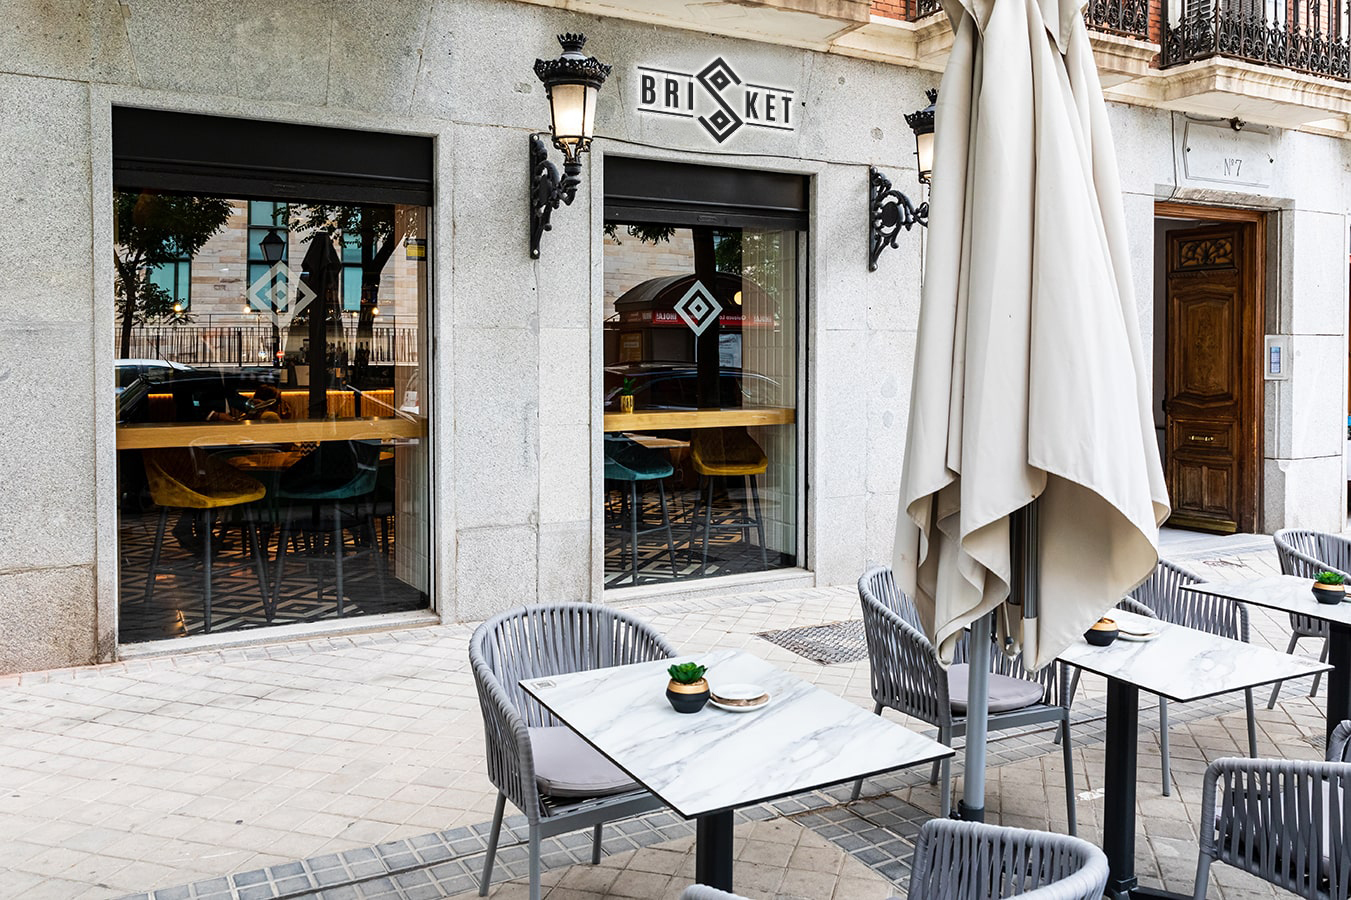 restaurante-en-madrid-brisket-fachada